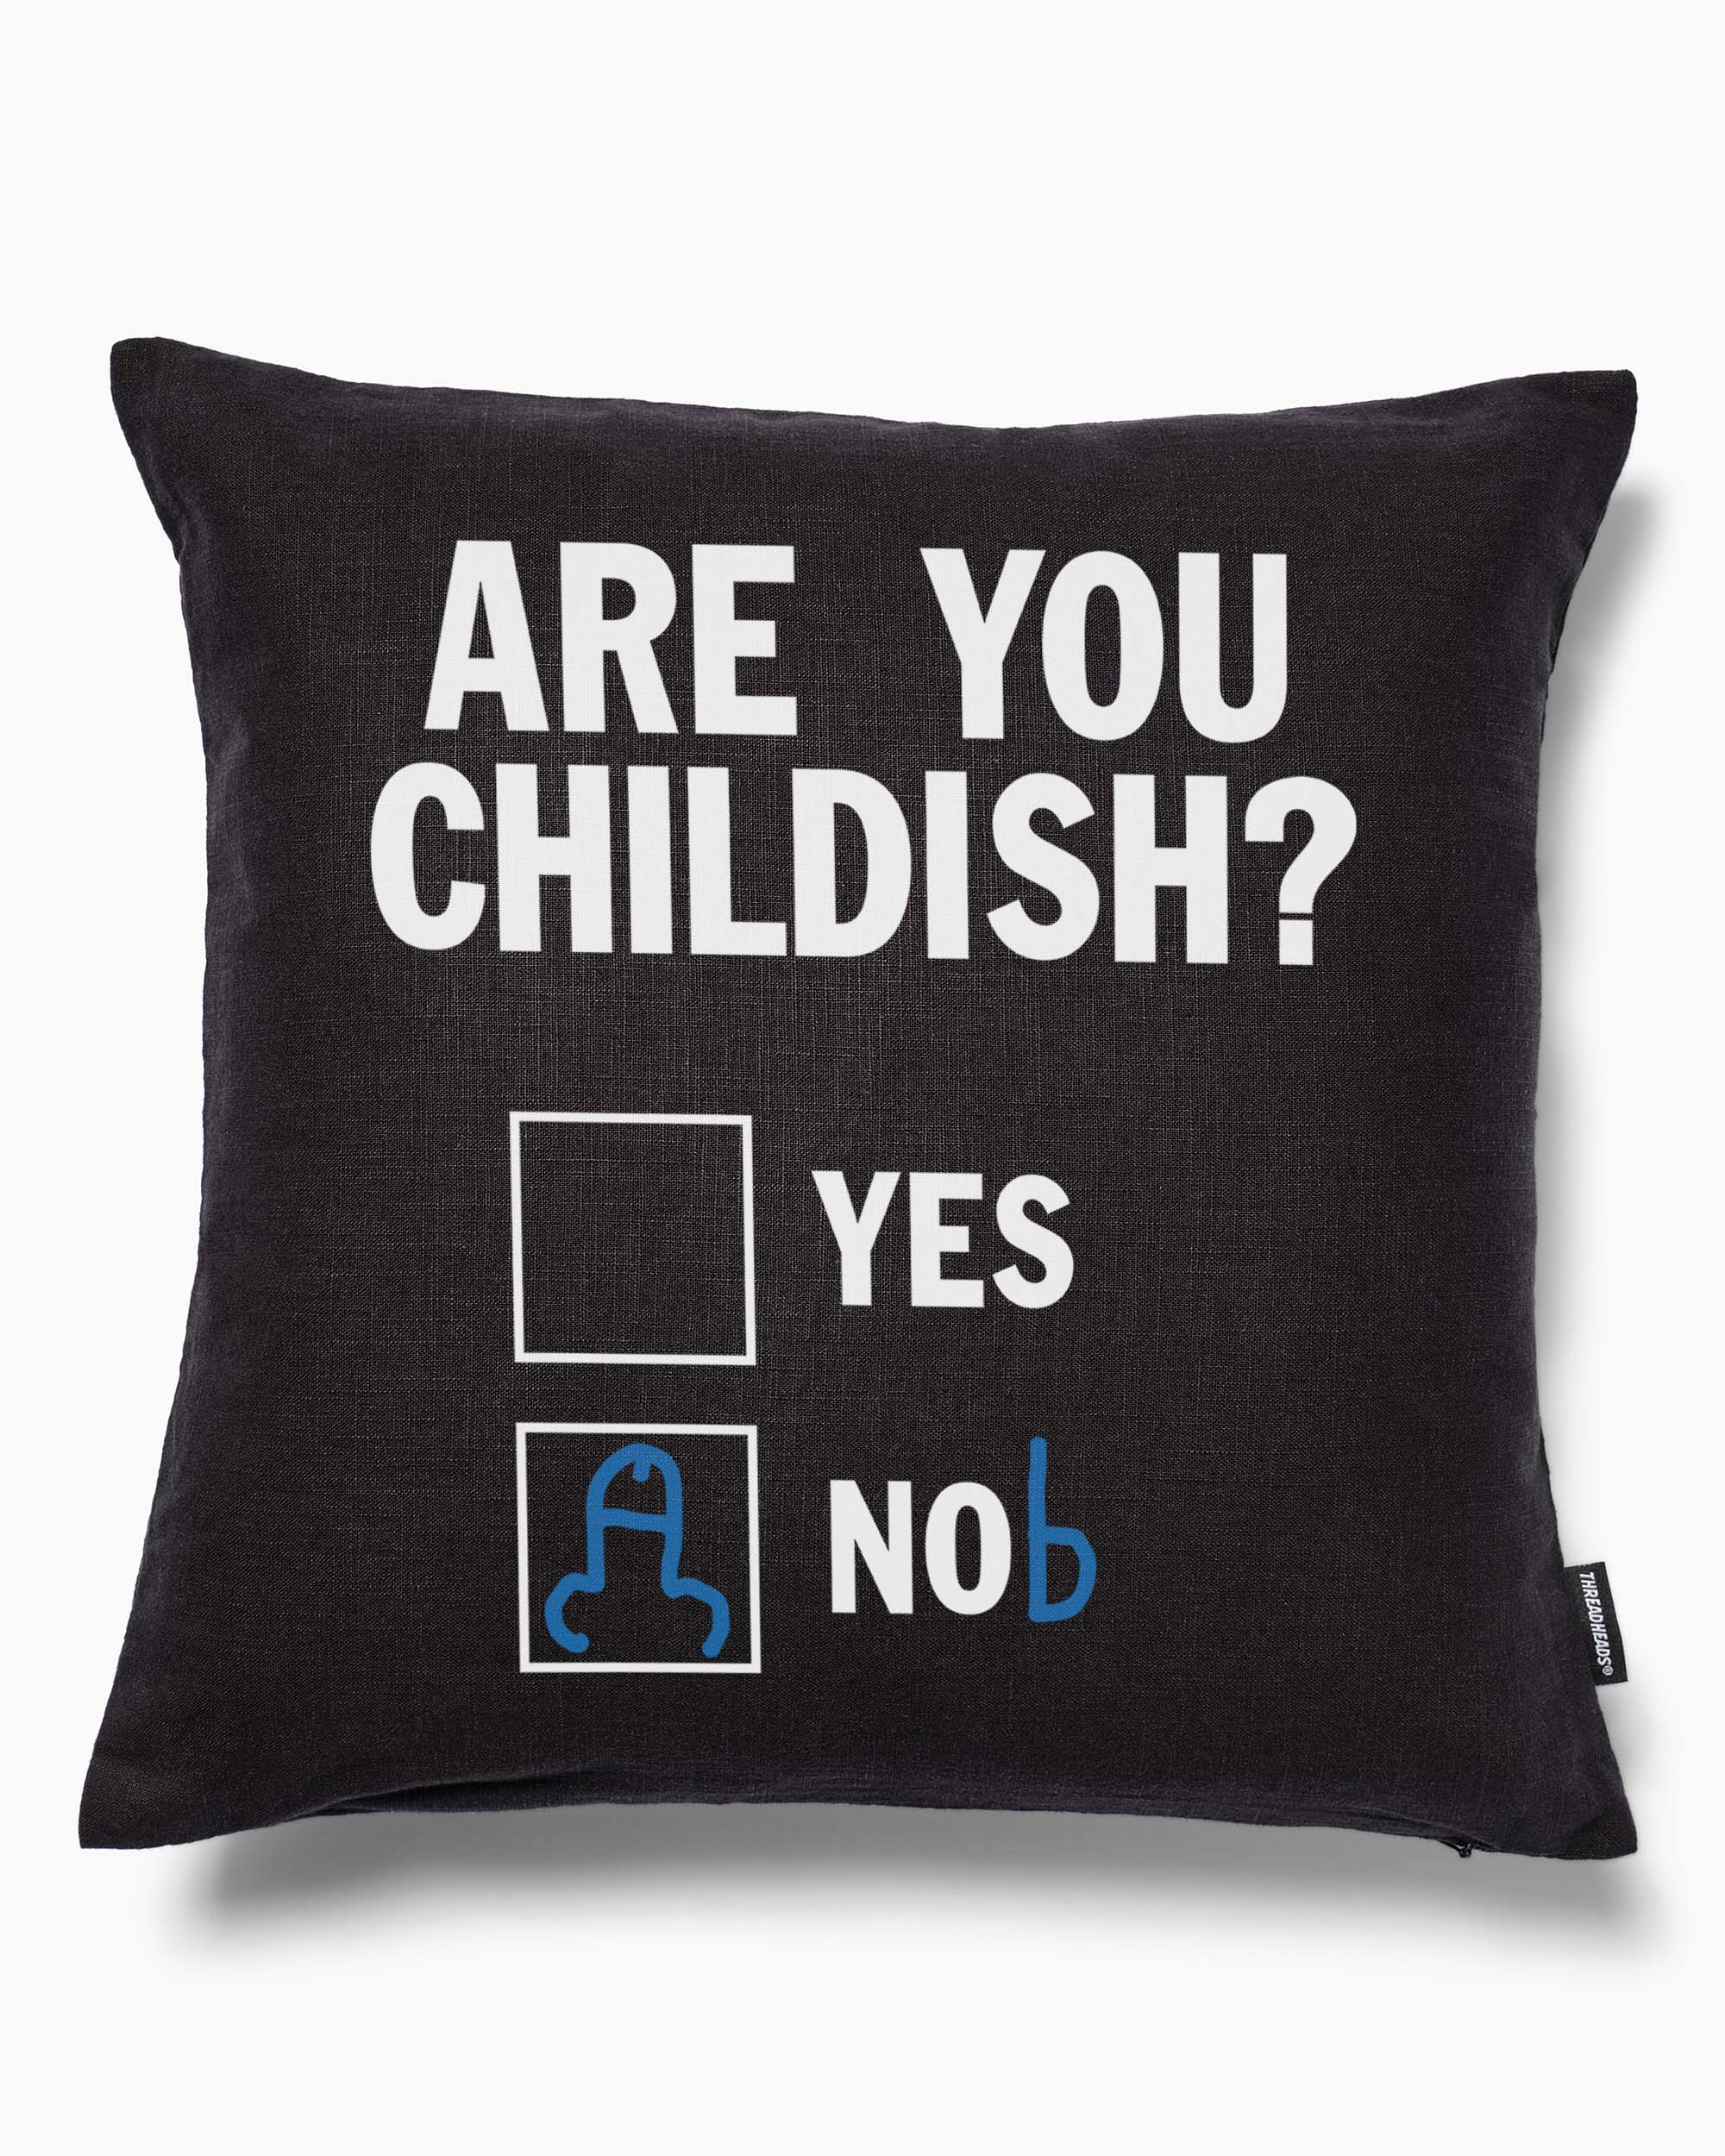 Are You Childish? Cushion